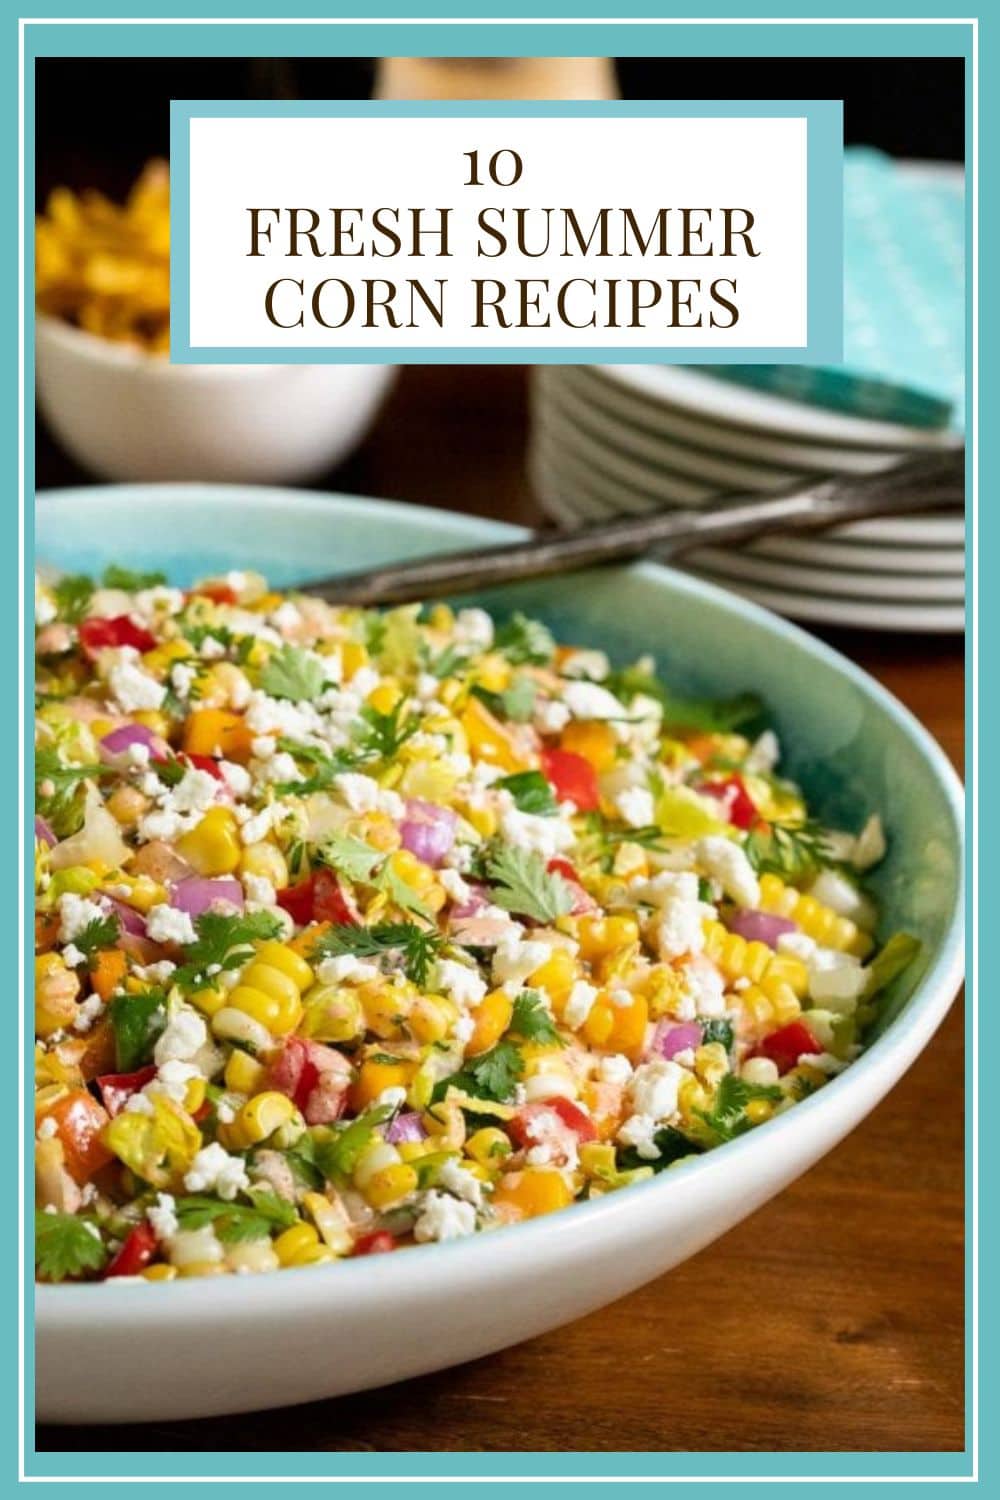 Delicious Recipes for Fresh Summer Corn!